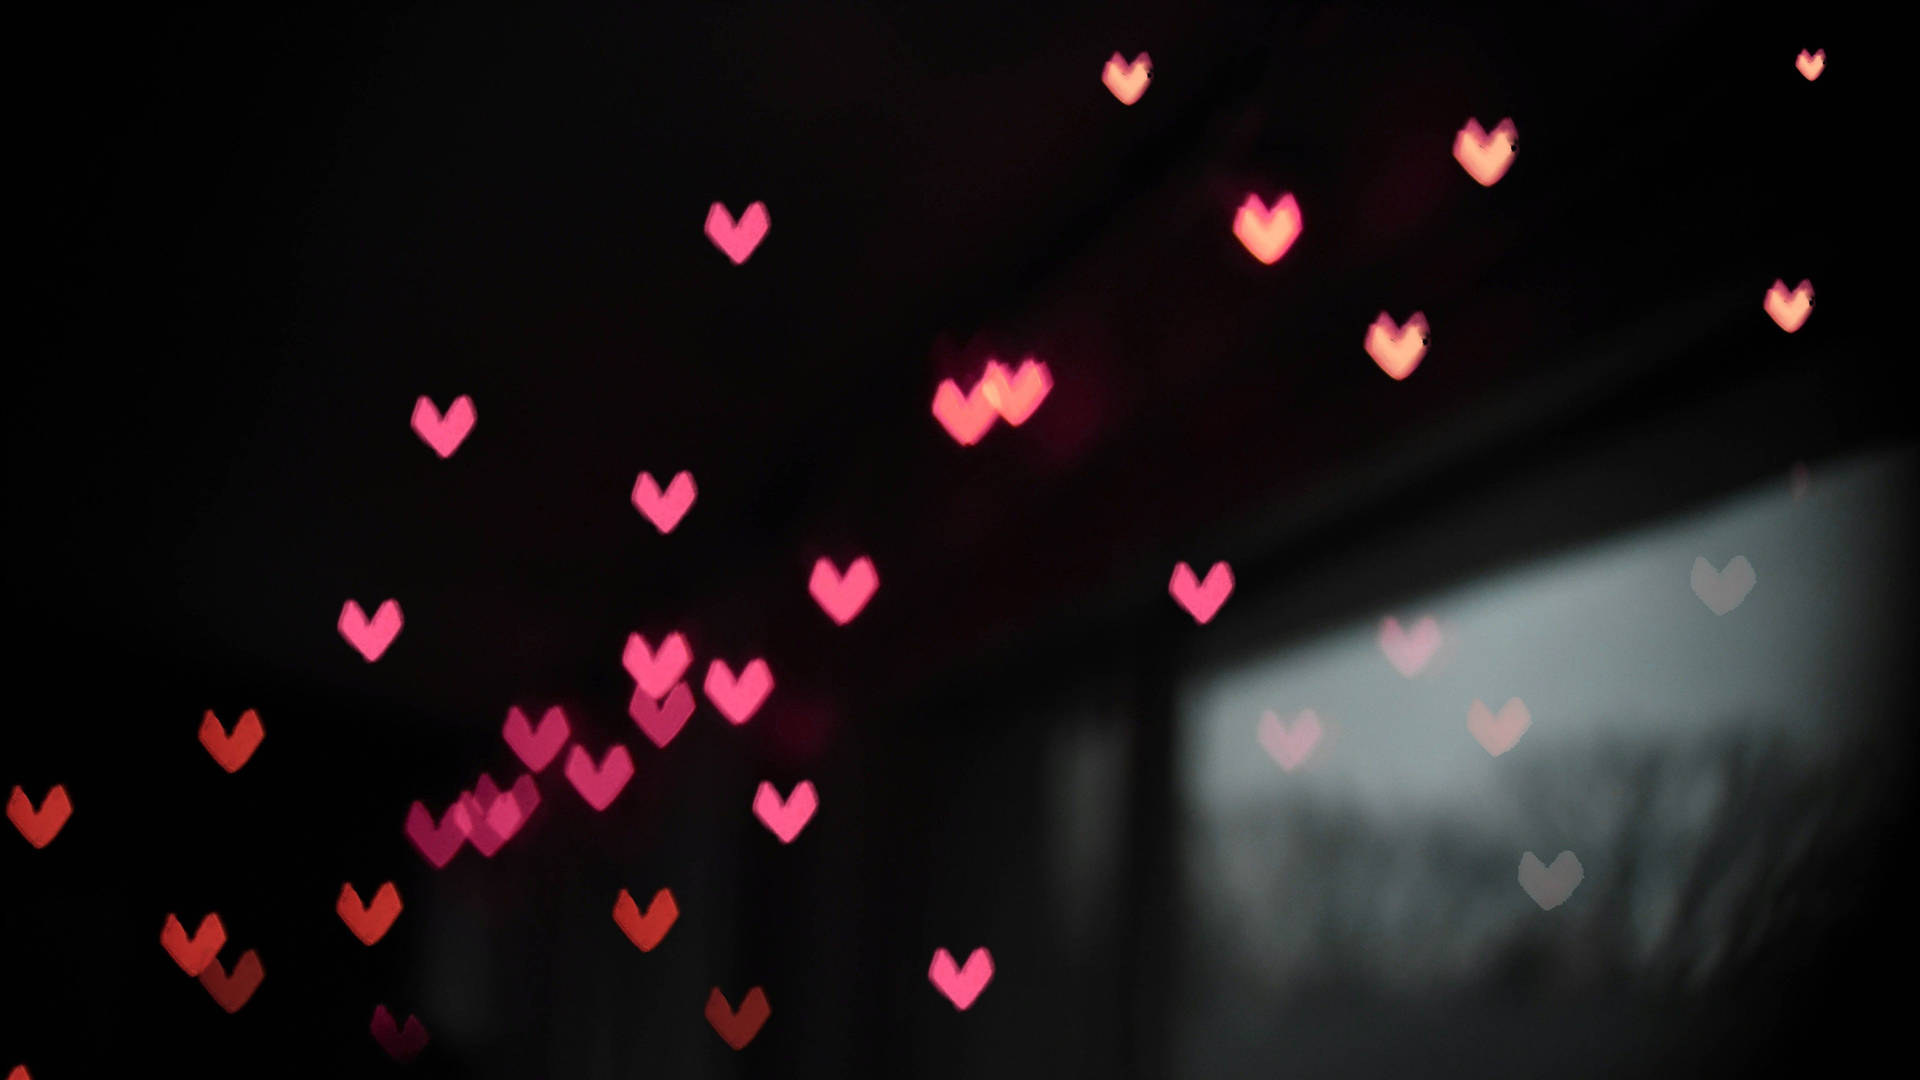 Dark Heart Image Of Pink Hearts Background